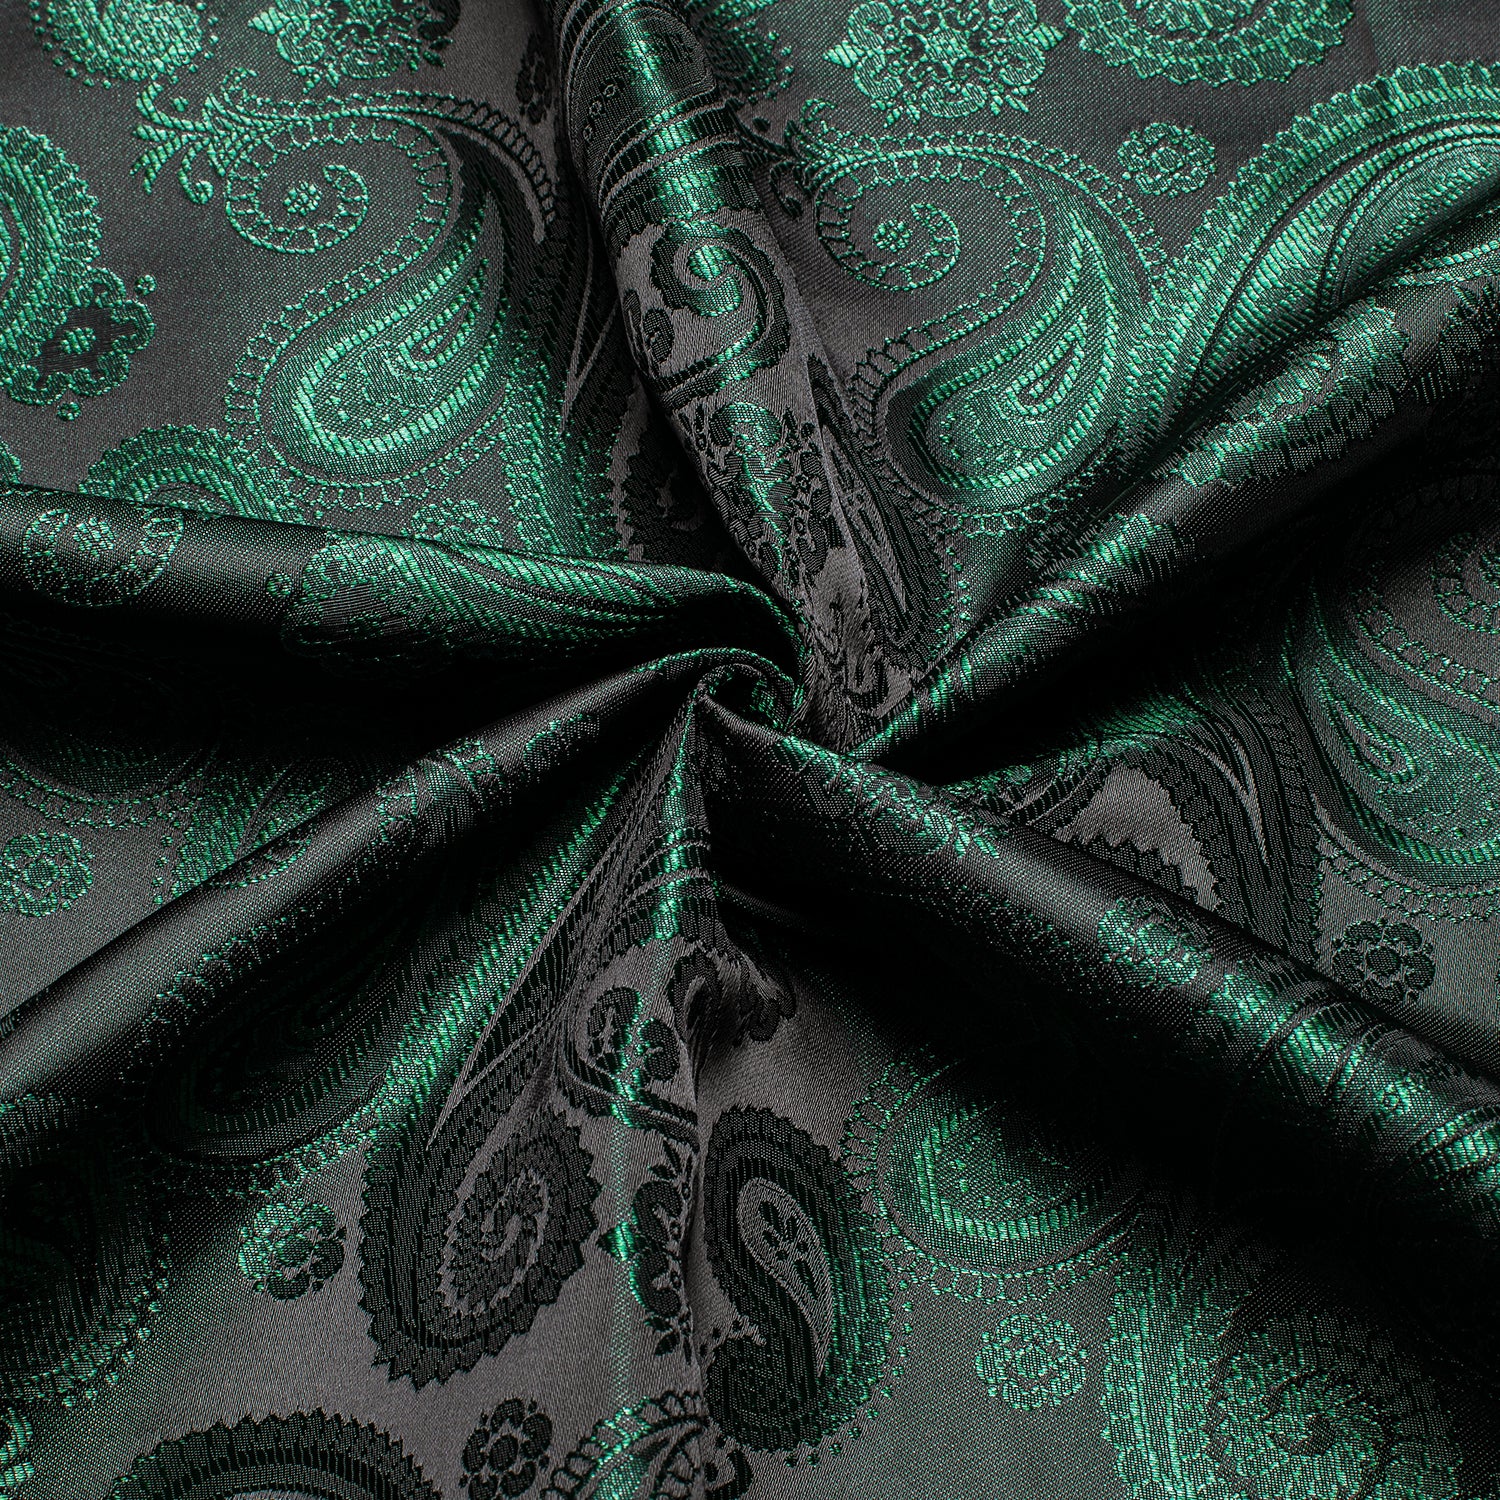 Emerald Green Black Paisley Silk Men's Long Sleeve Shirt Casual